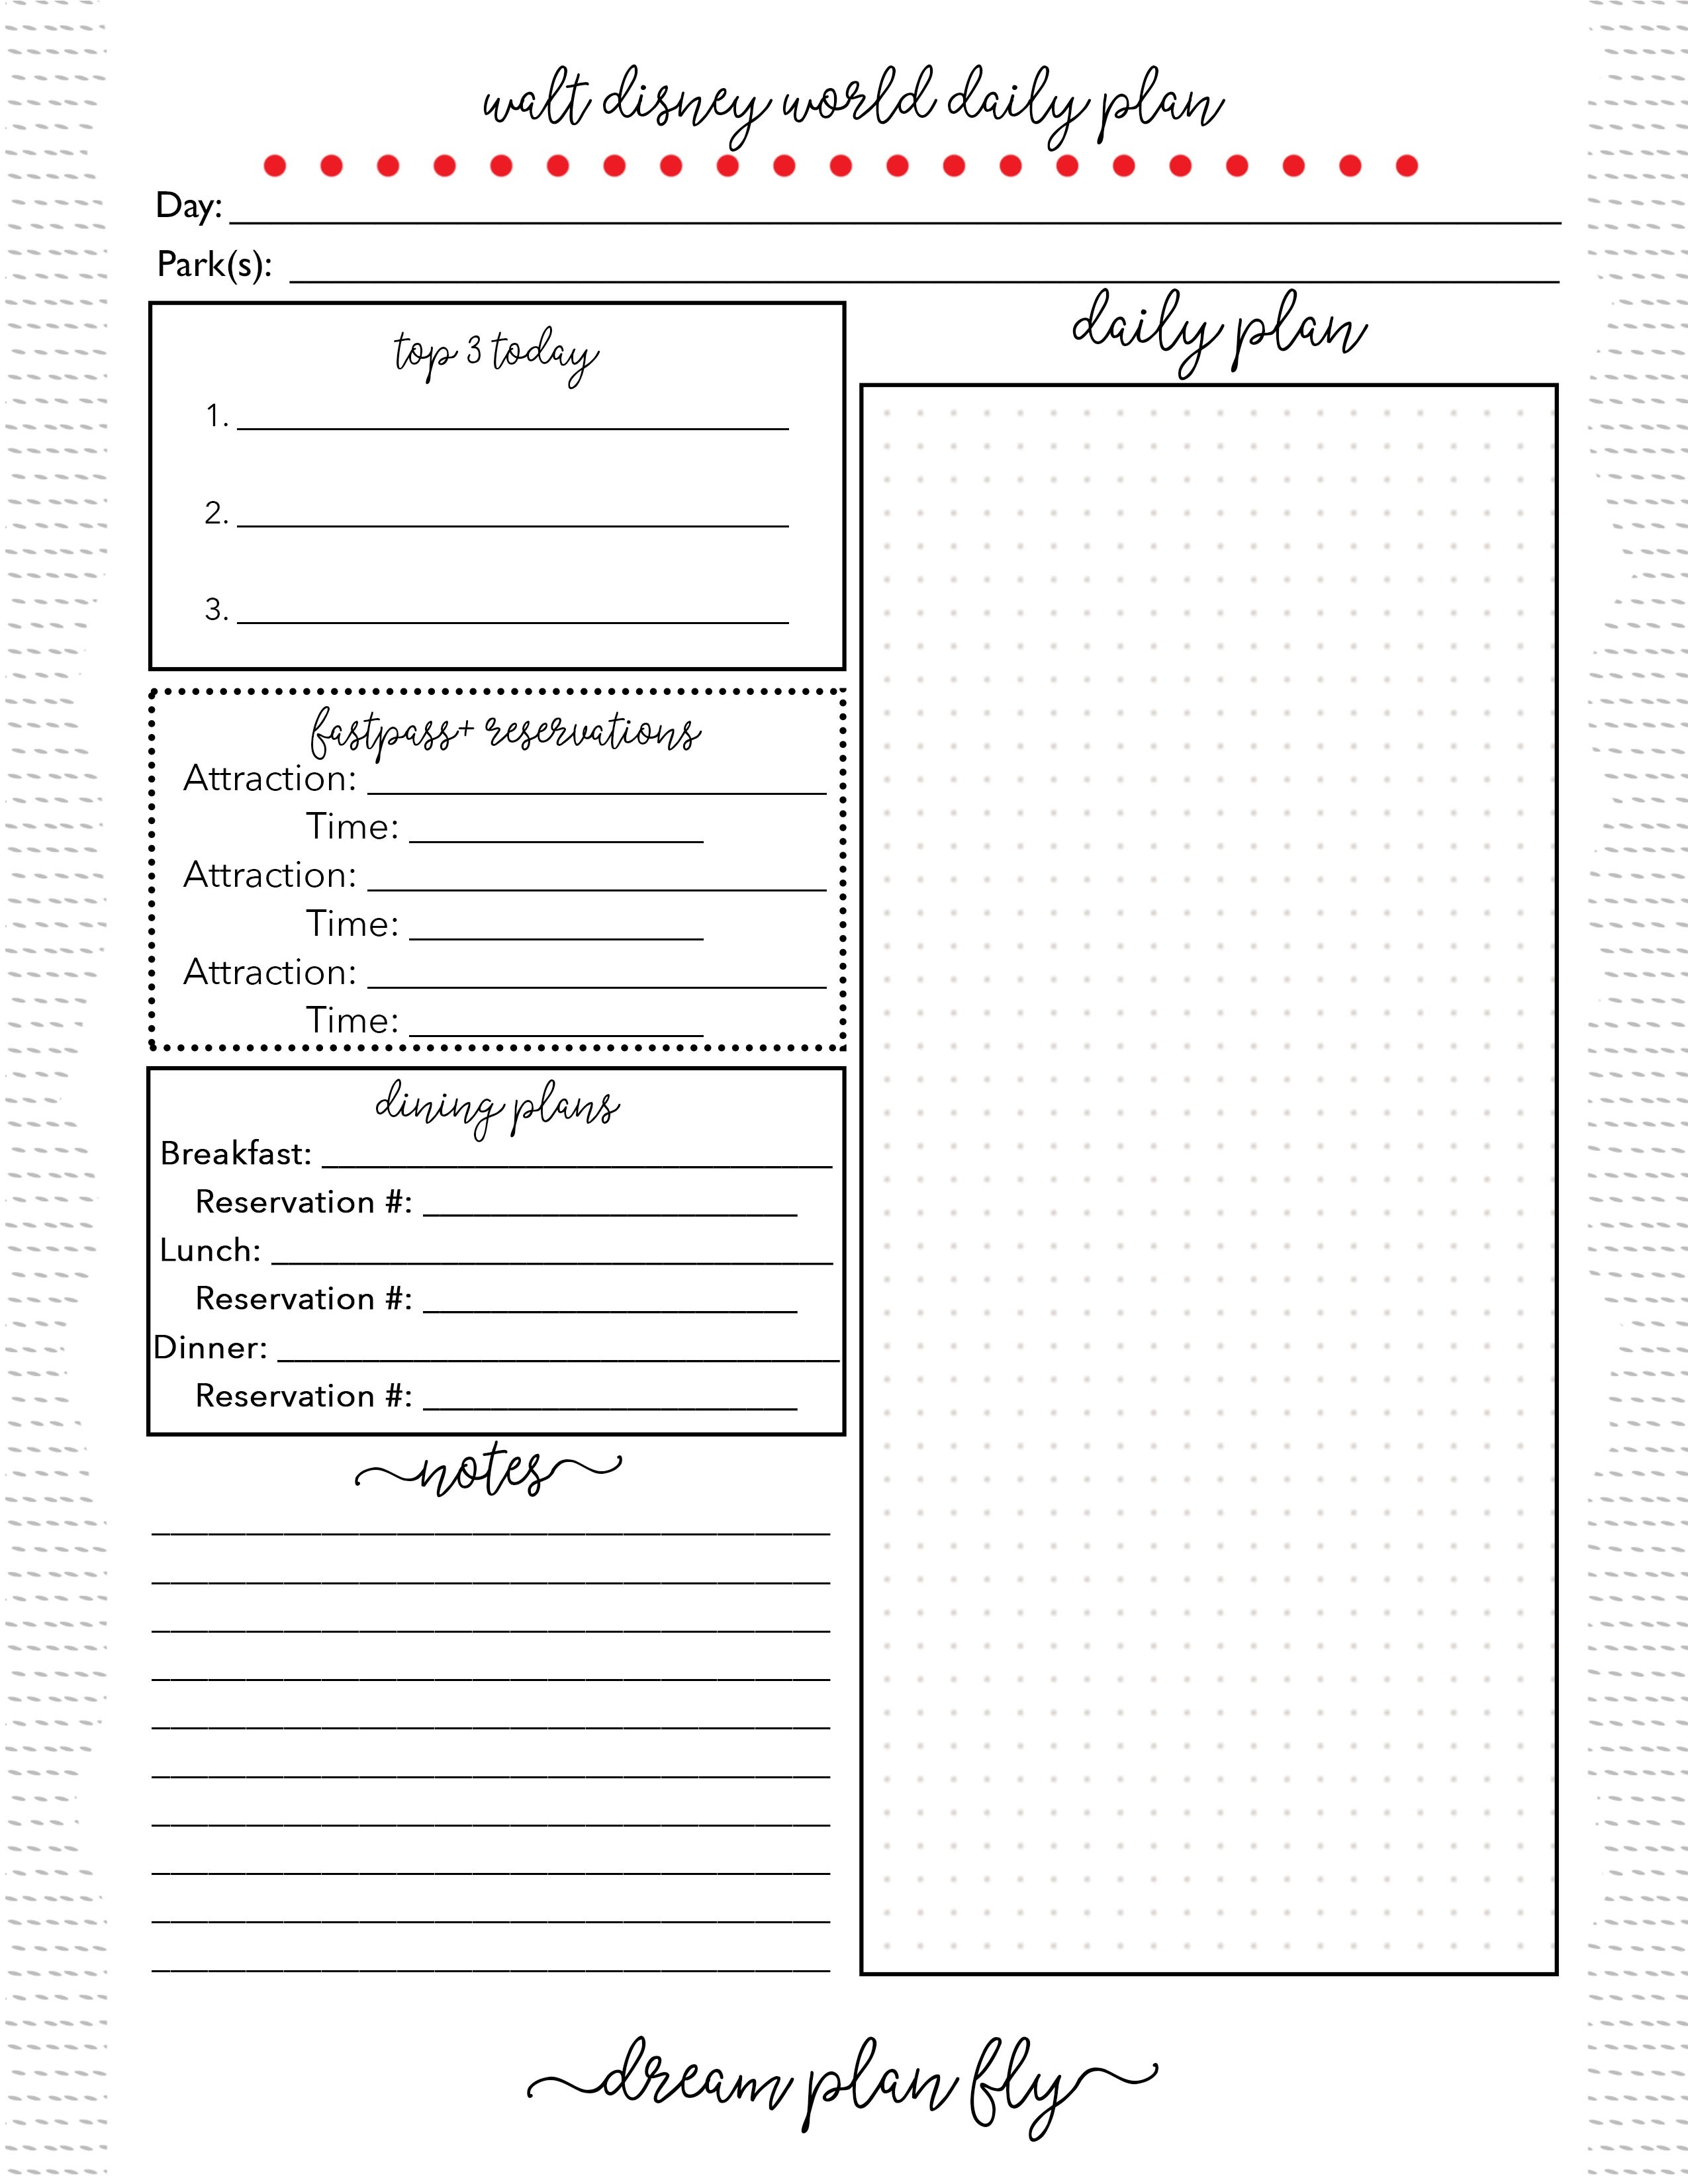 Free Printable Daily Planner For Walt Disney World - Dream-Disney World Itinerary Template Pdf